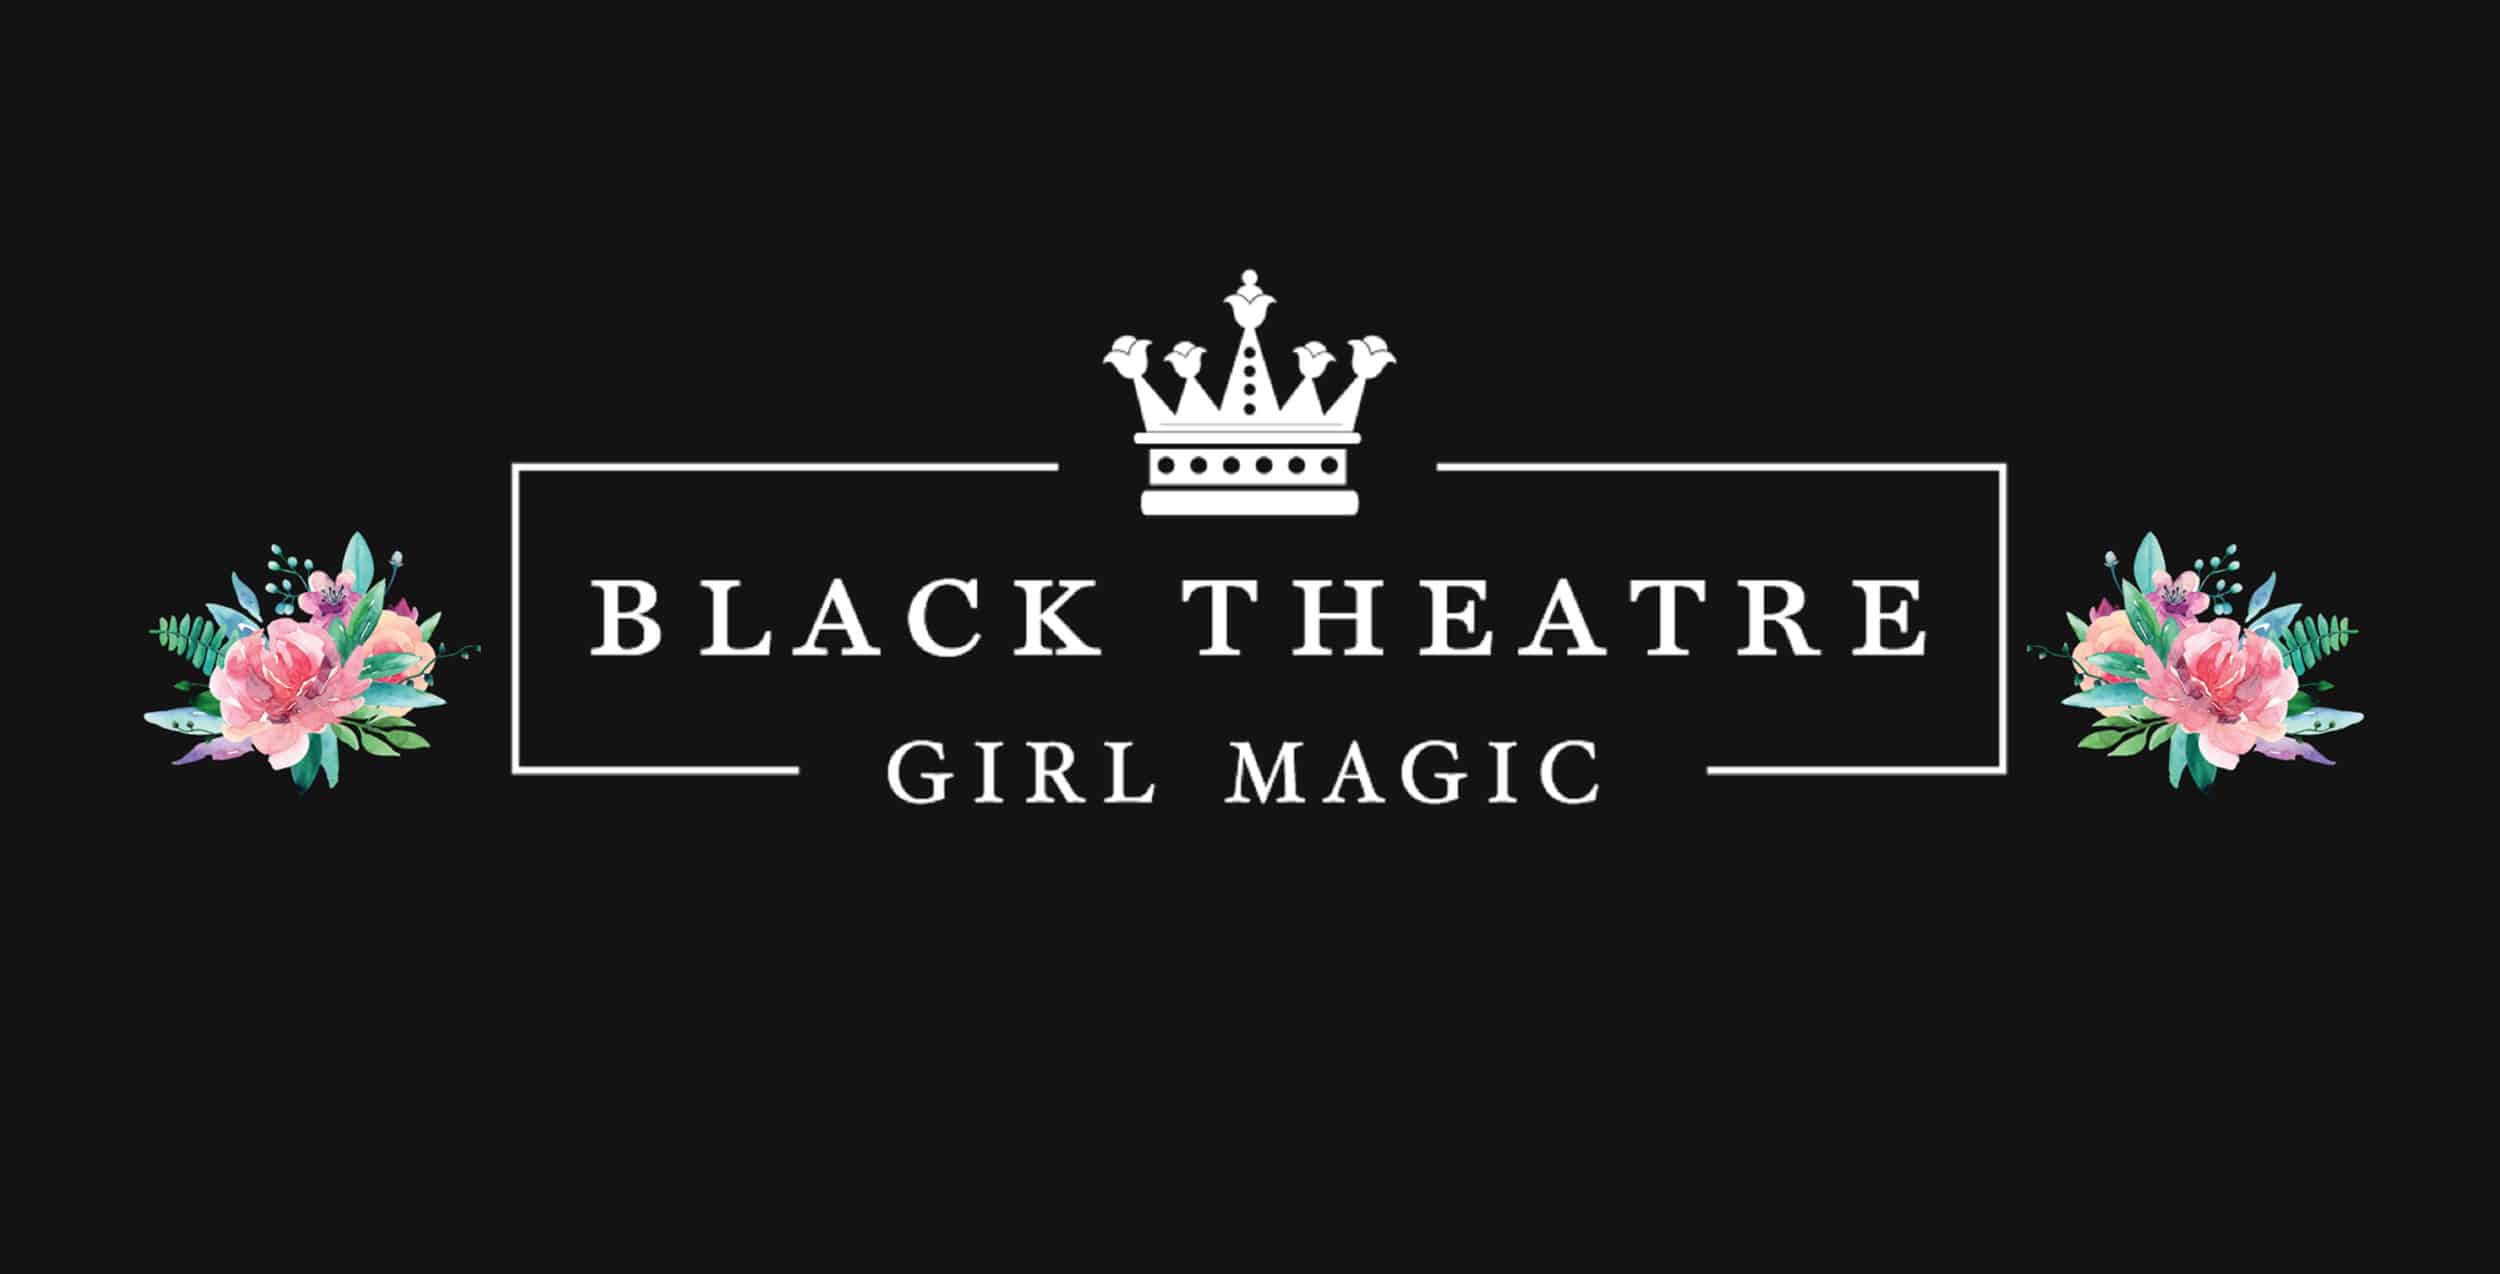 Black Theatre Girl Magic